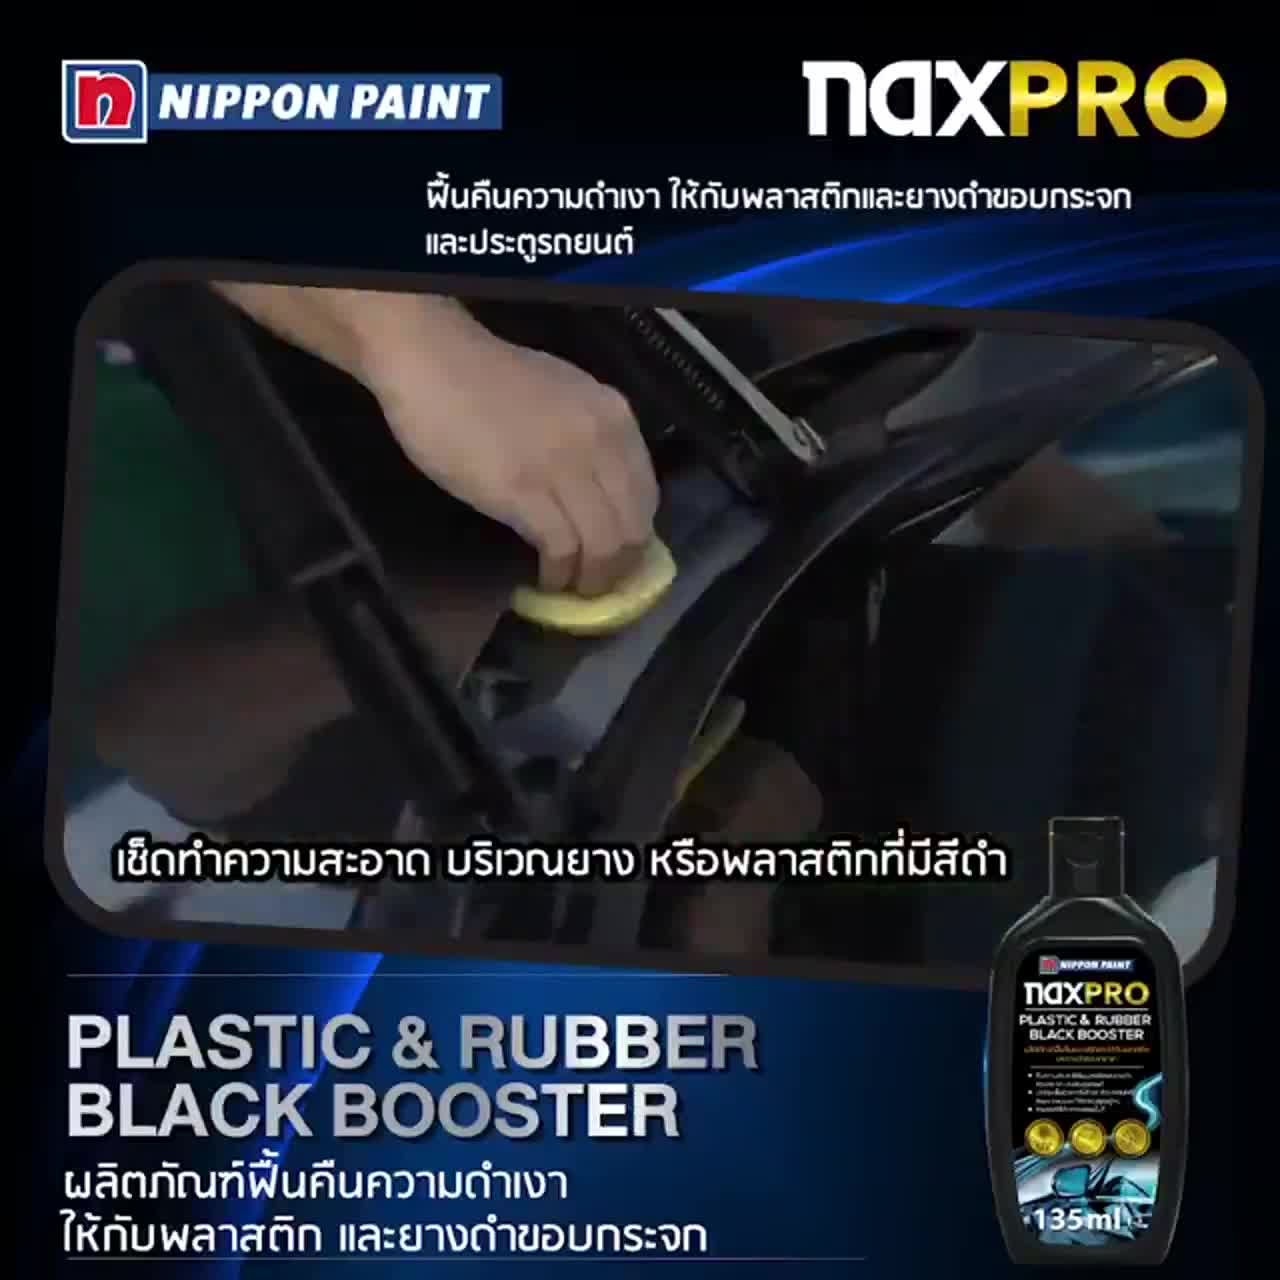 naxpro-plastic-amp-rubber-black-booster-135-ml-ฟื้นคืนความดำเงาให้กับพลาสติก-และยางดำขอบกระจก